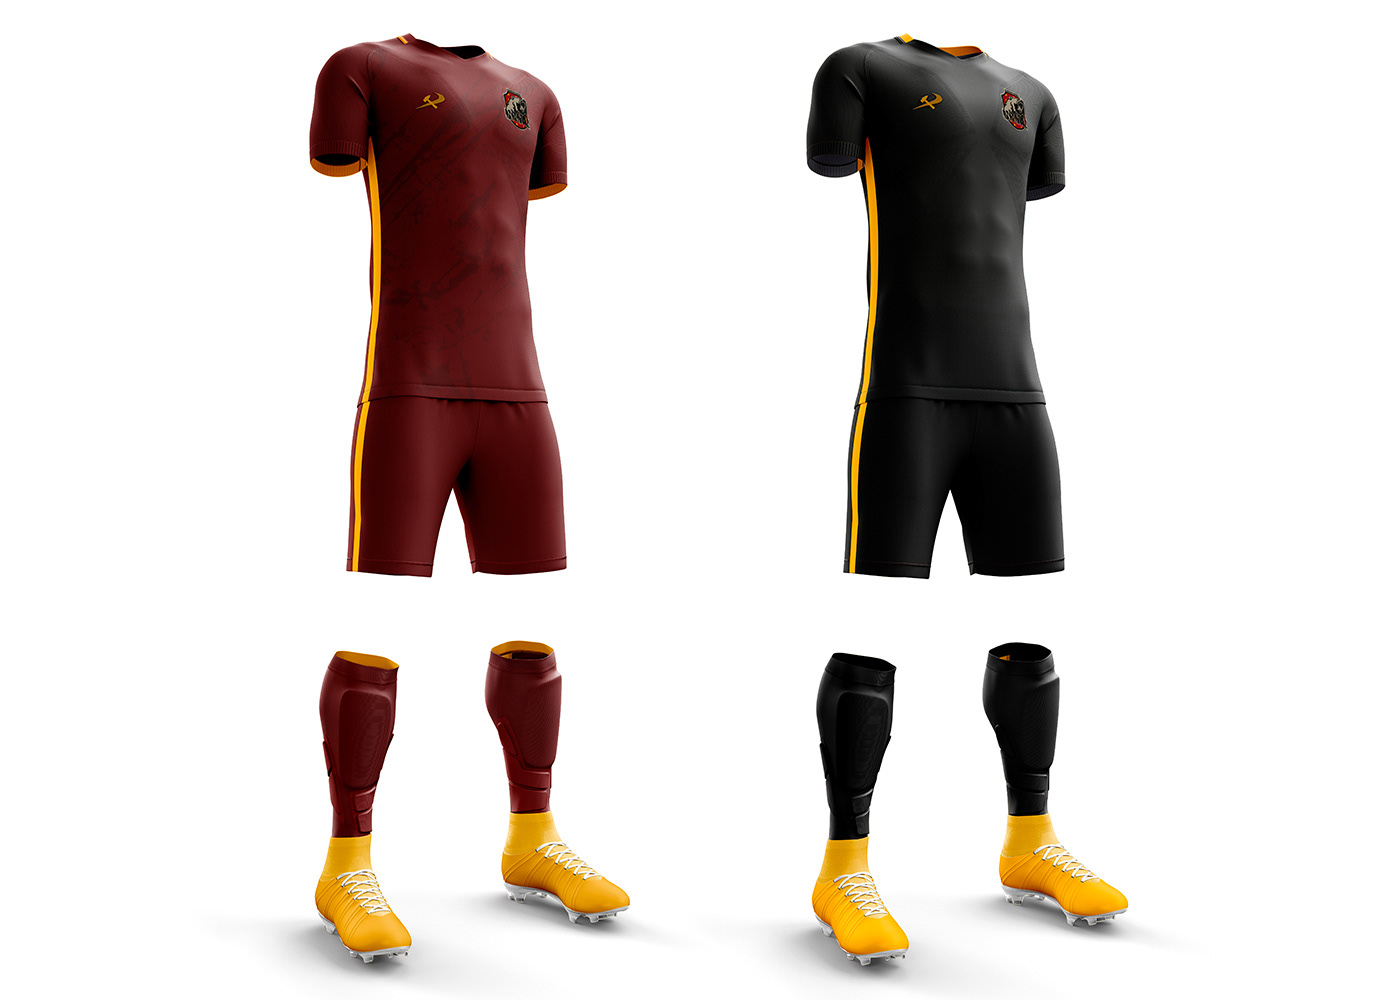 ursal urss jersey soccer uniformes uniforme seleção